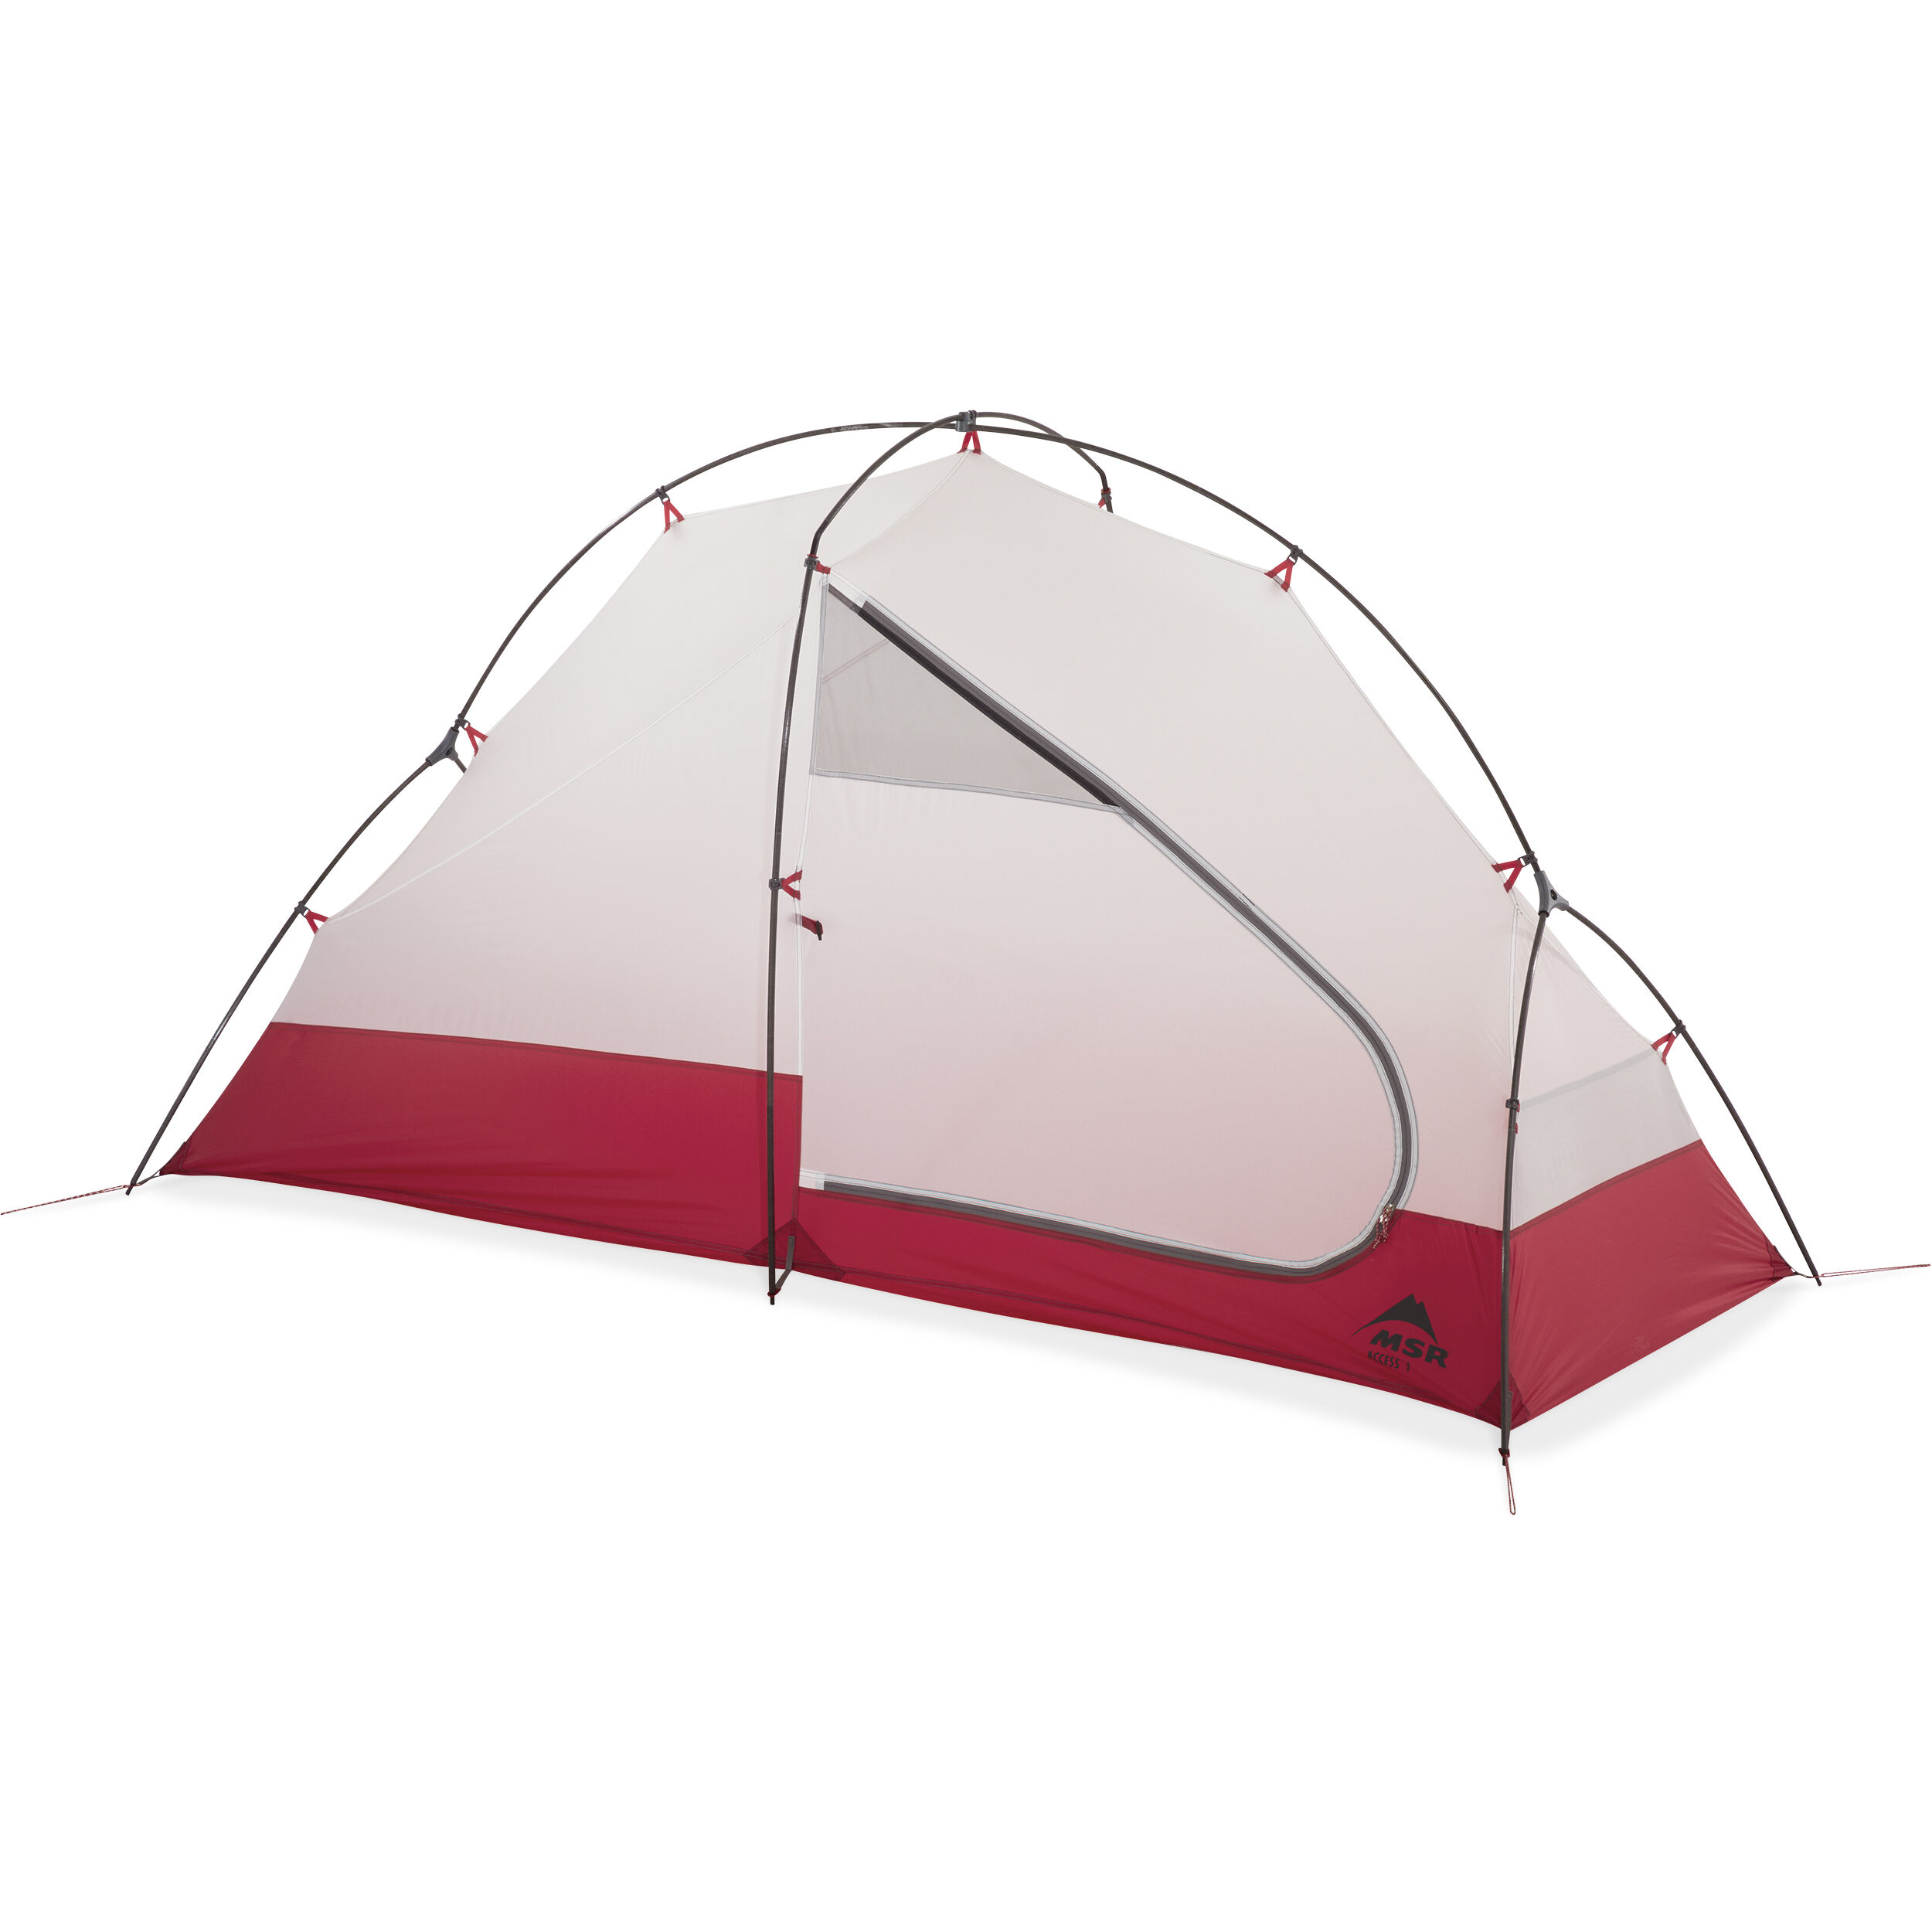 Access™ 1 - Ultralight 1-person, 4-Season Tent | MSR®